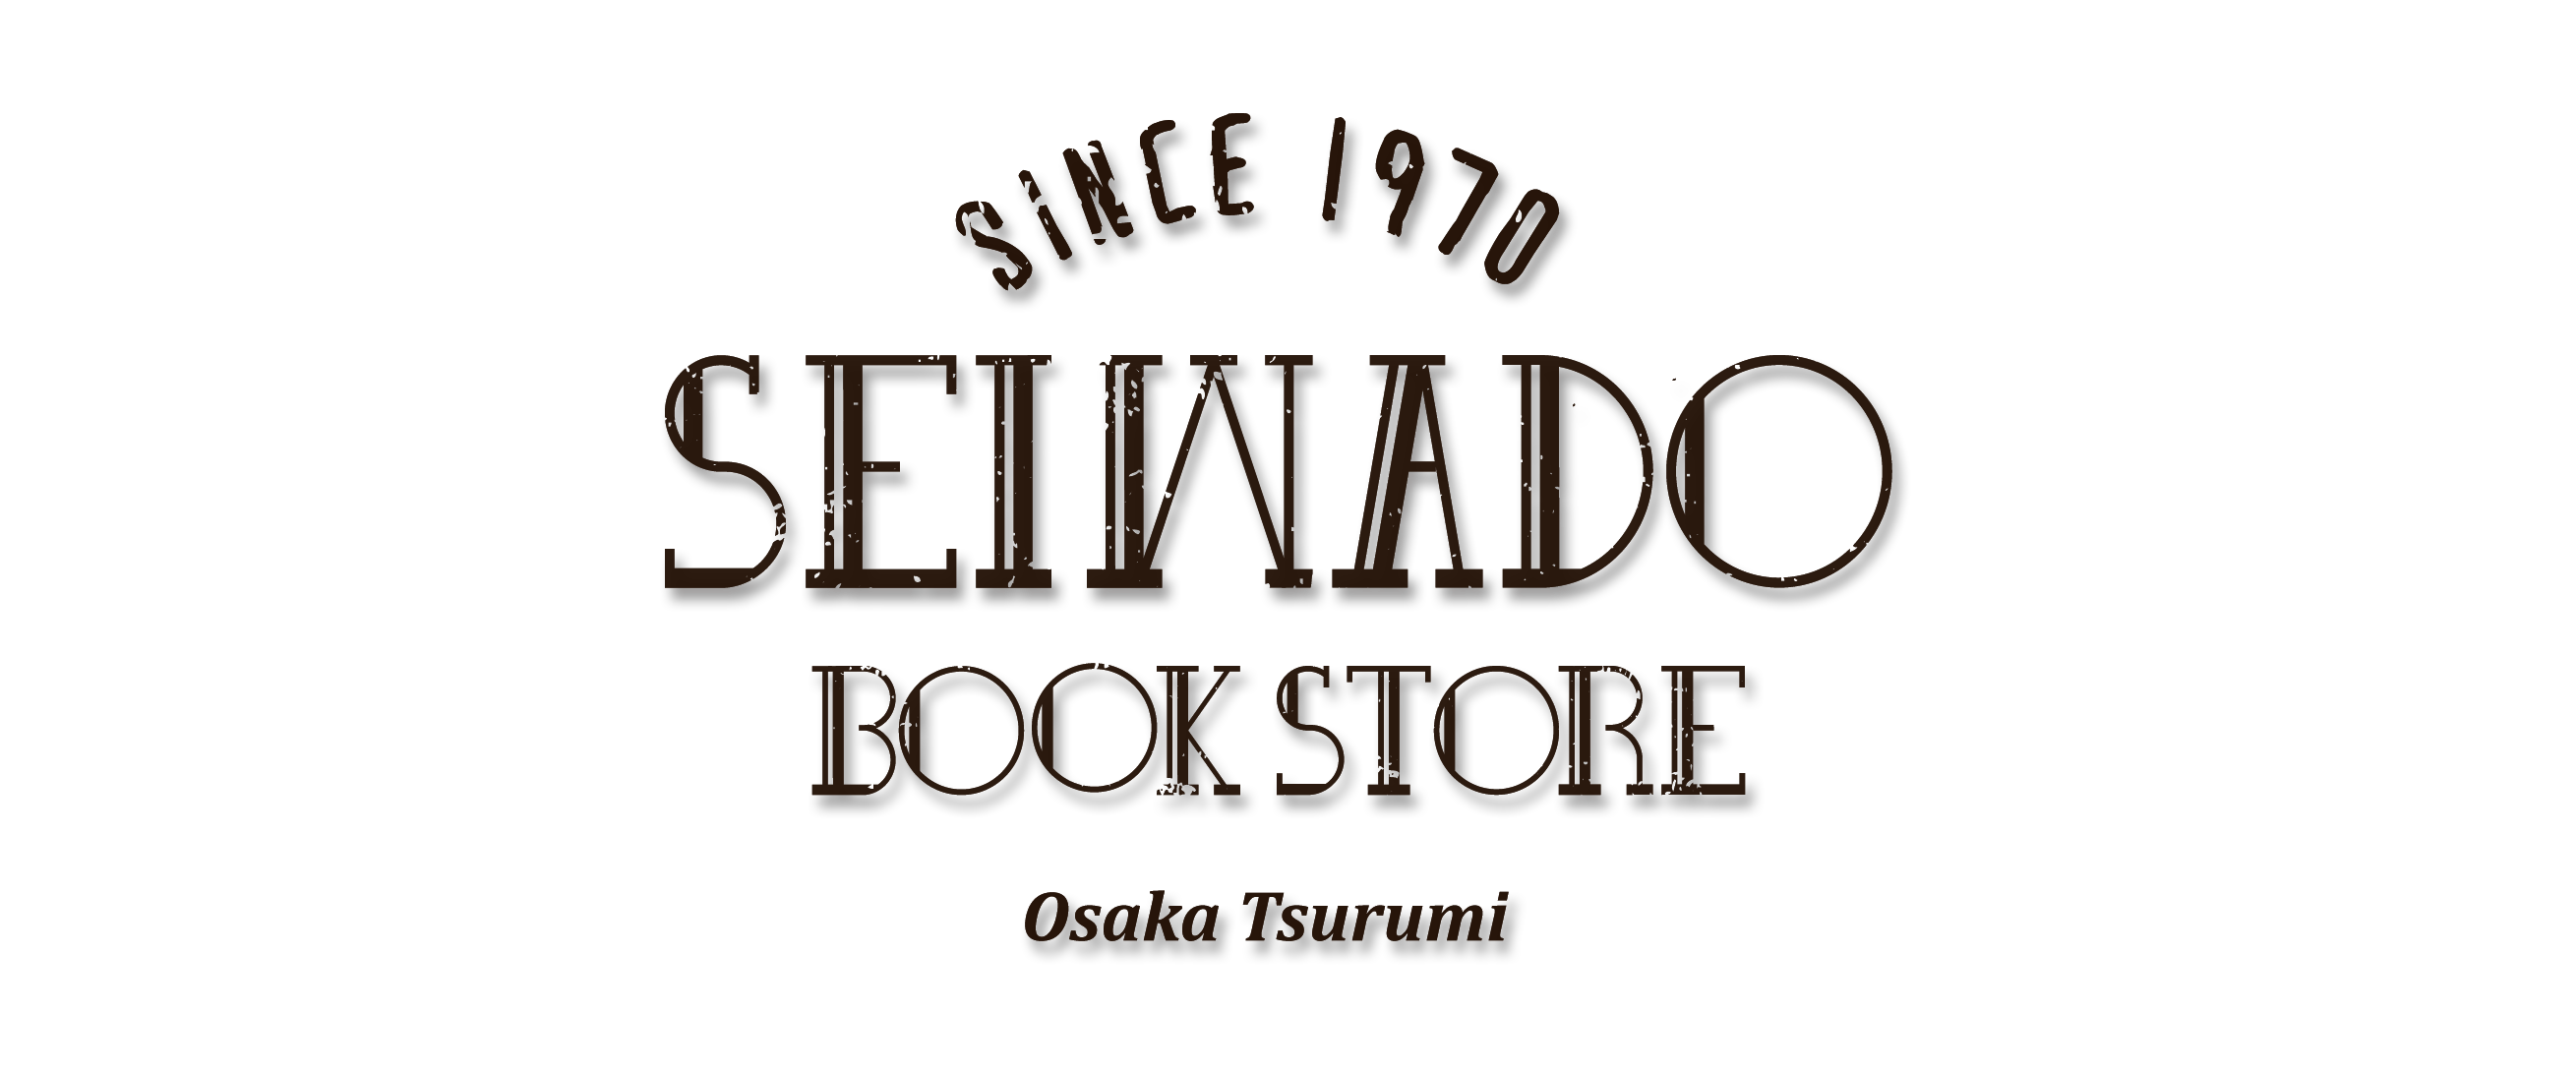 seiwado.book.store.